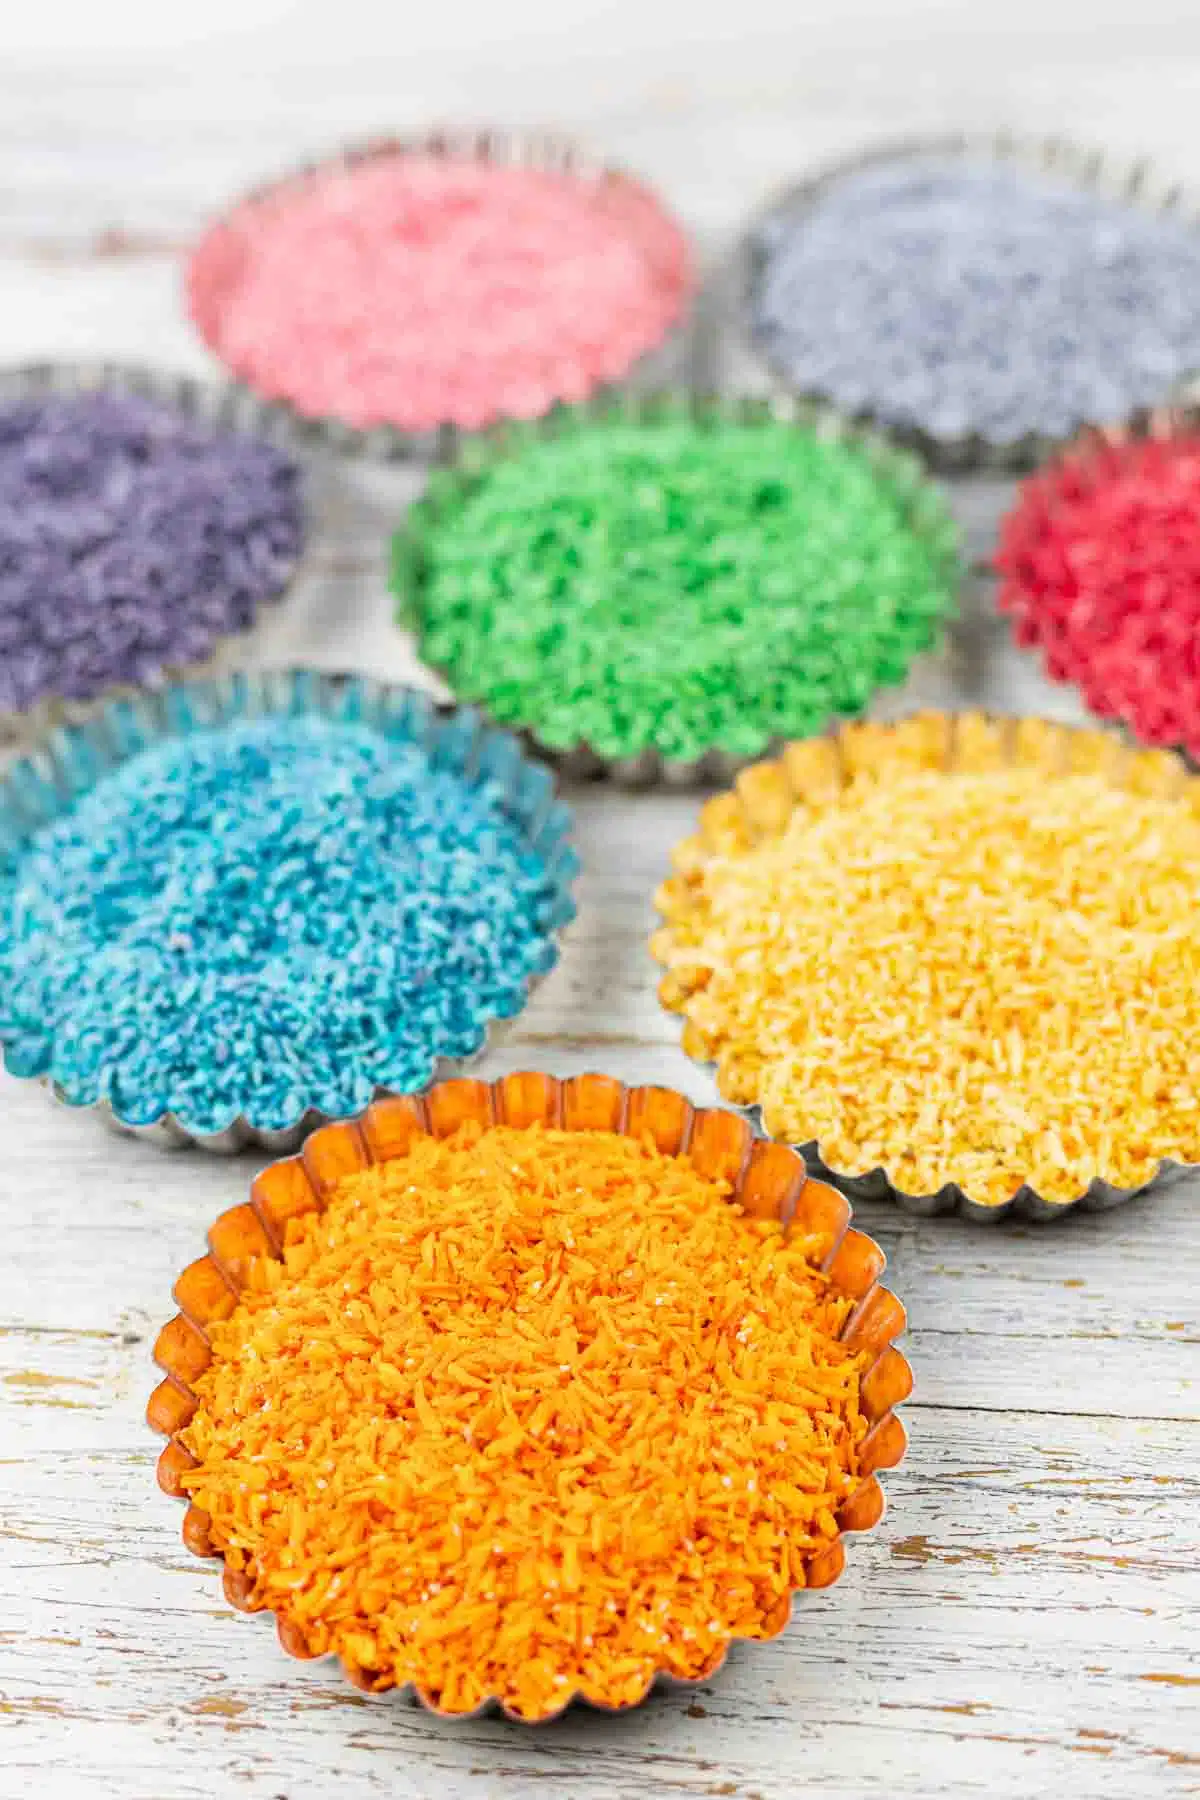 How To Make Sugar-Free Colorful Keto Sprinkles.